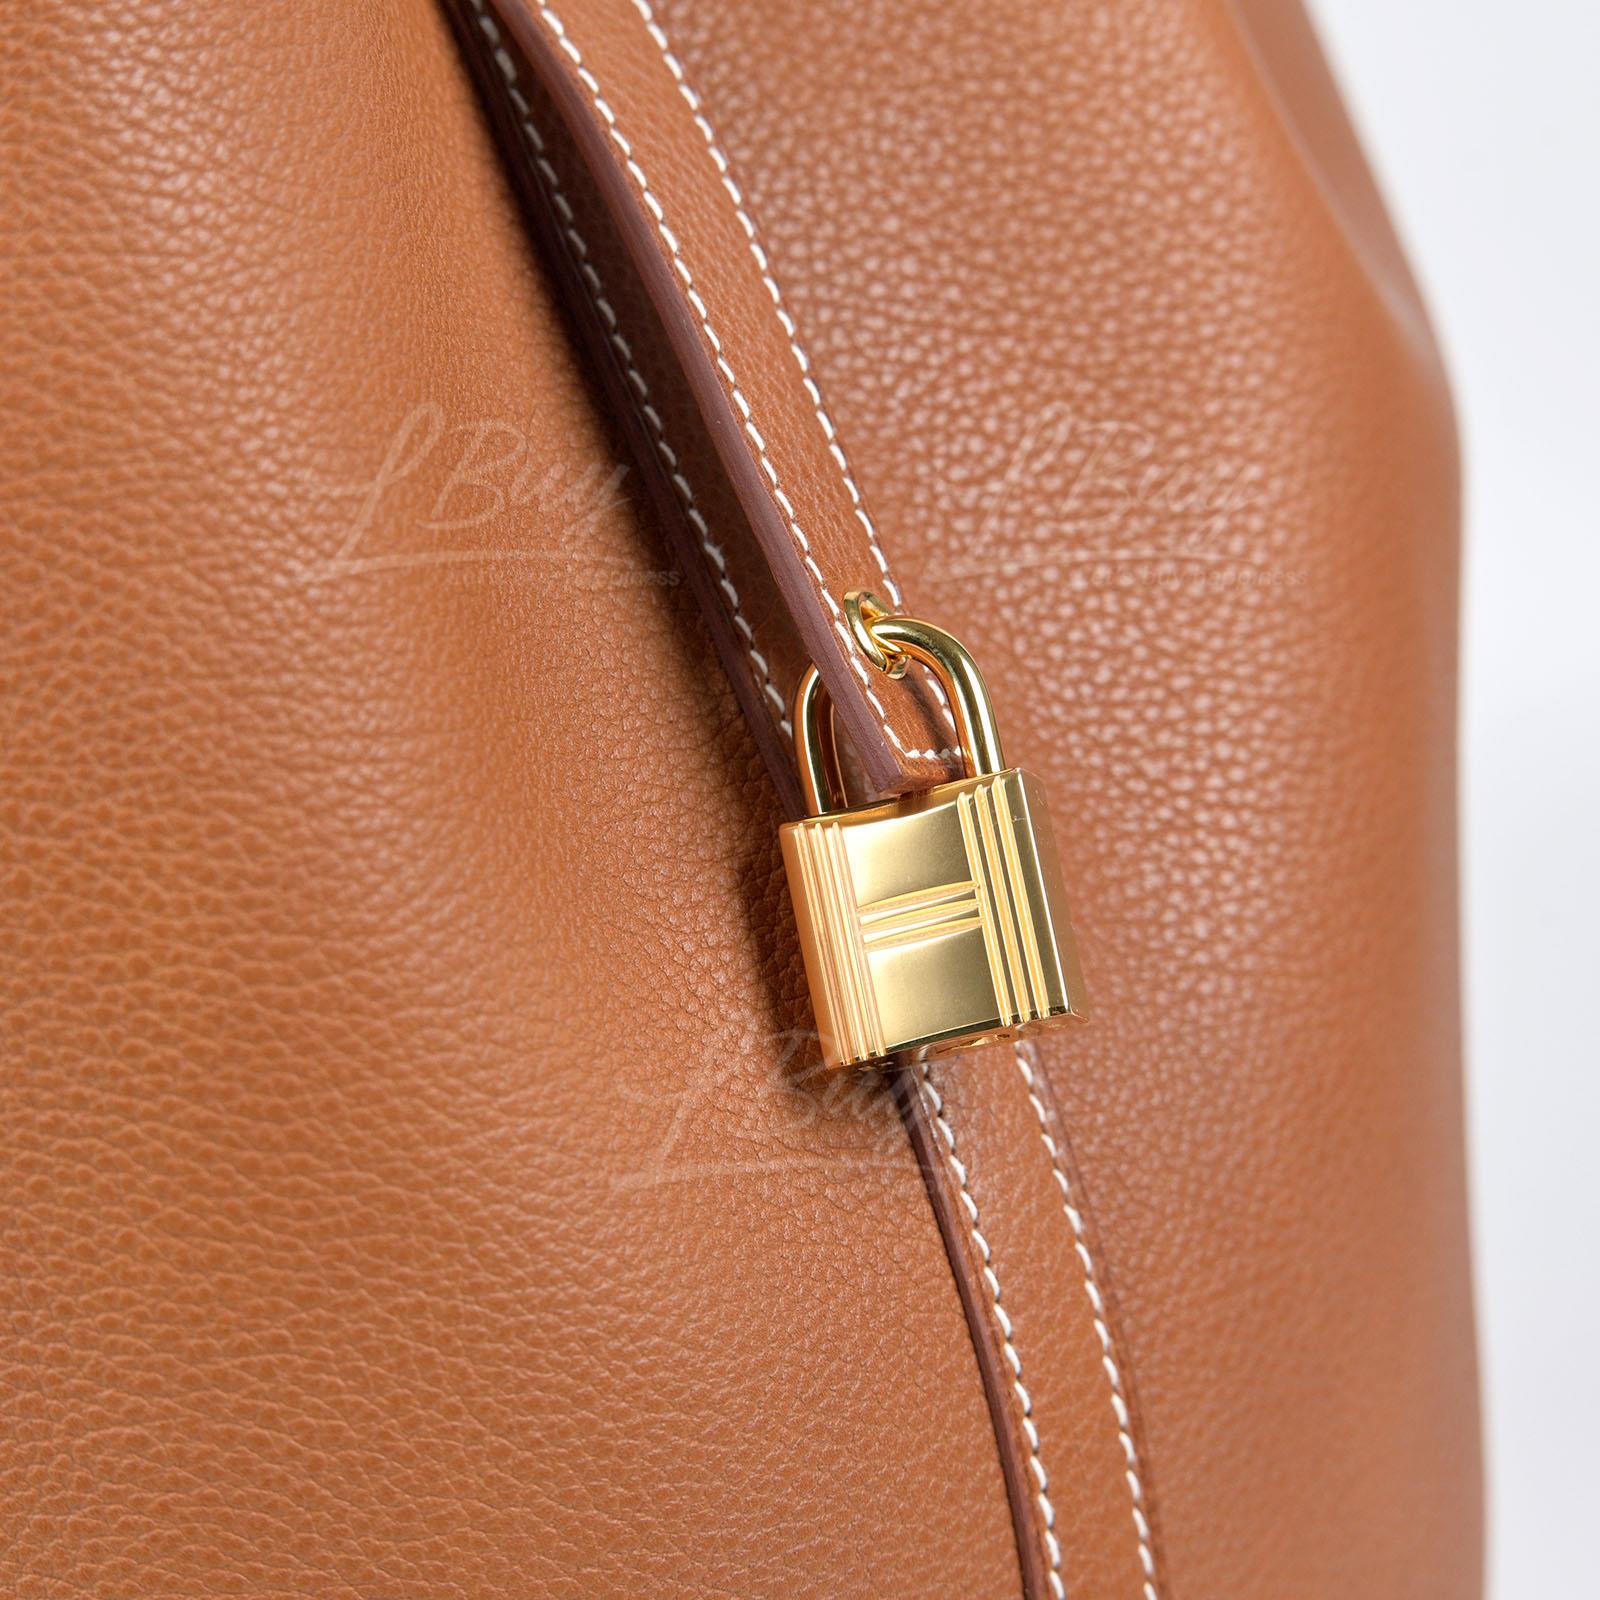 Buy Wholesale China Brand Picotin Lock Bag Saffiano Soft Original